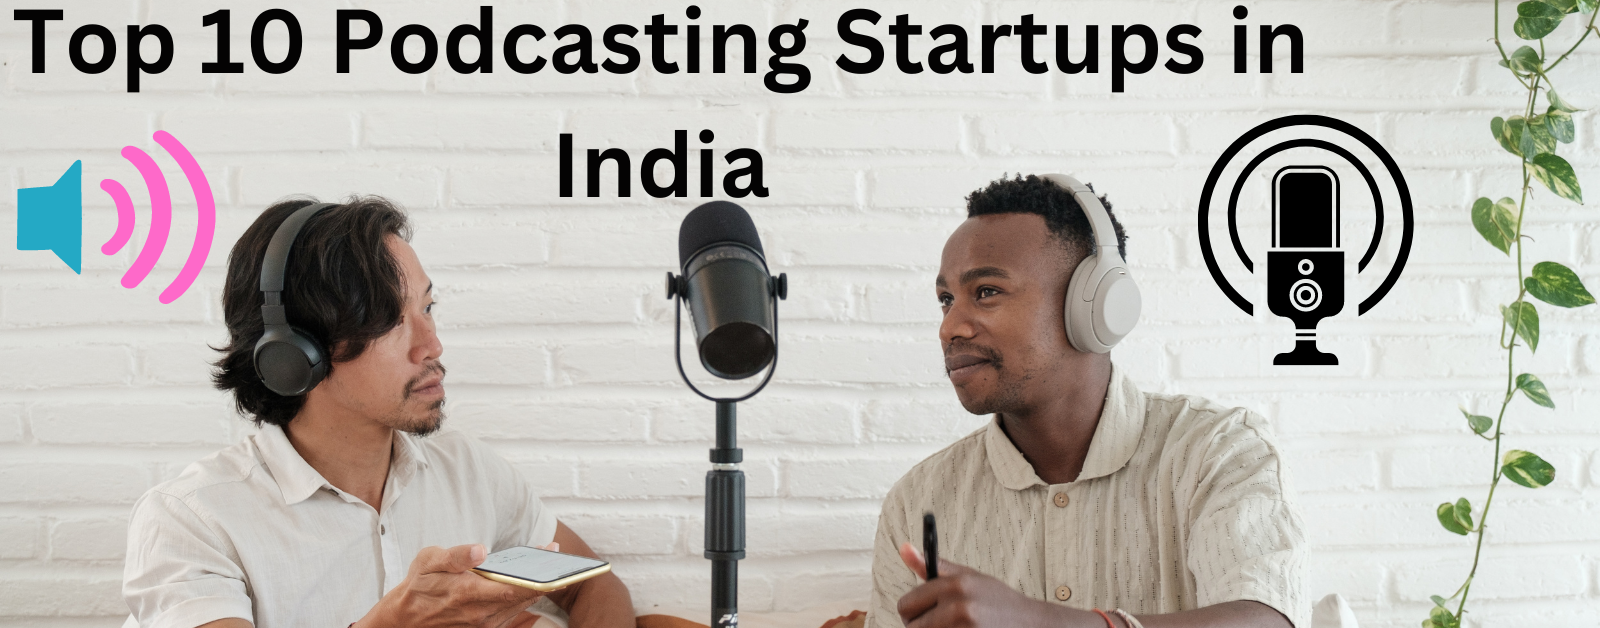 Top 10 Podcasting Startups in India Revolutionizing Audio Content